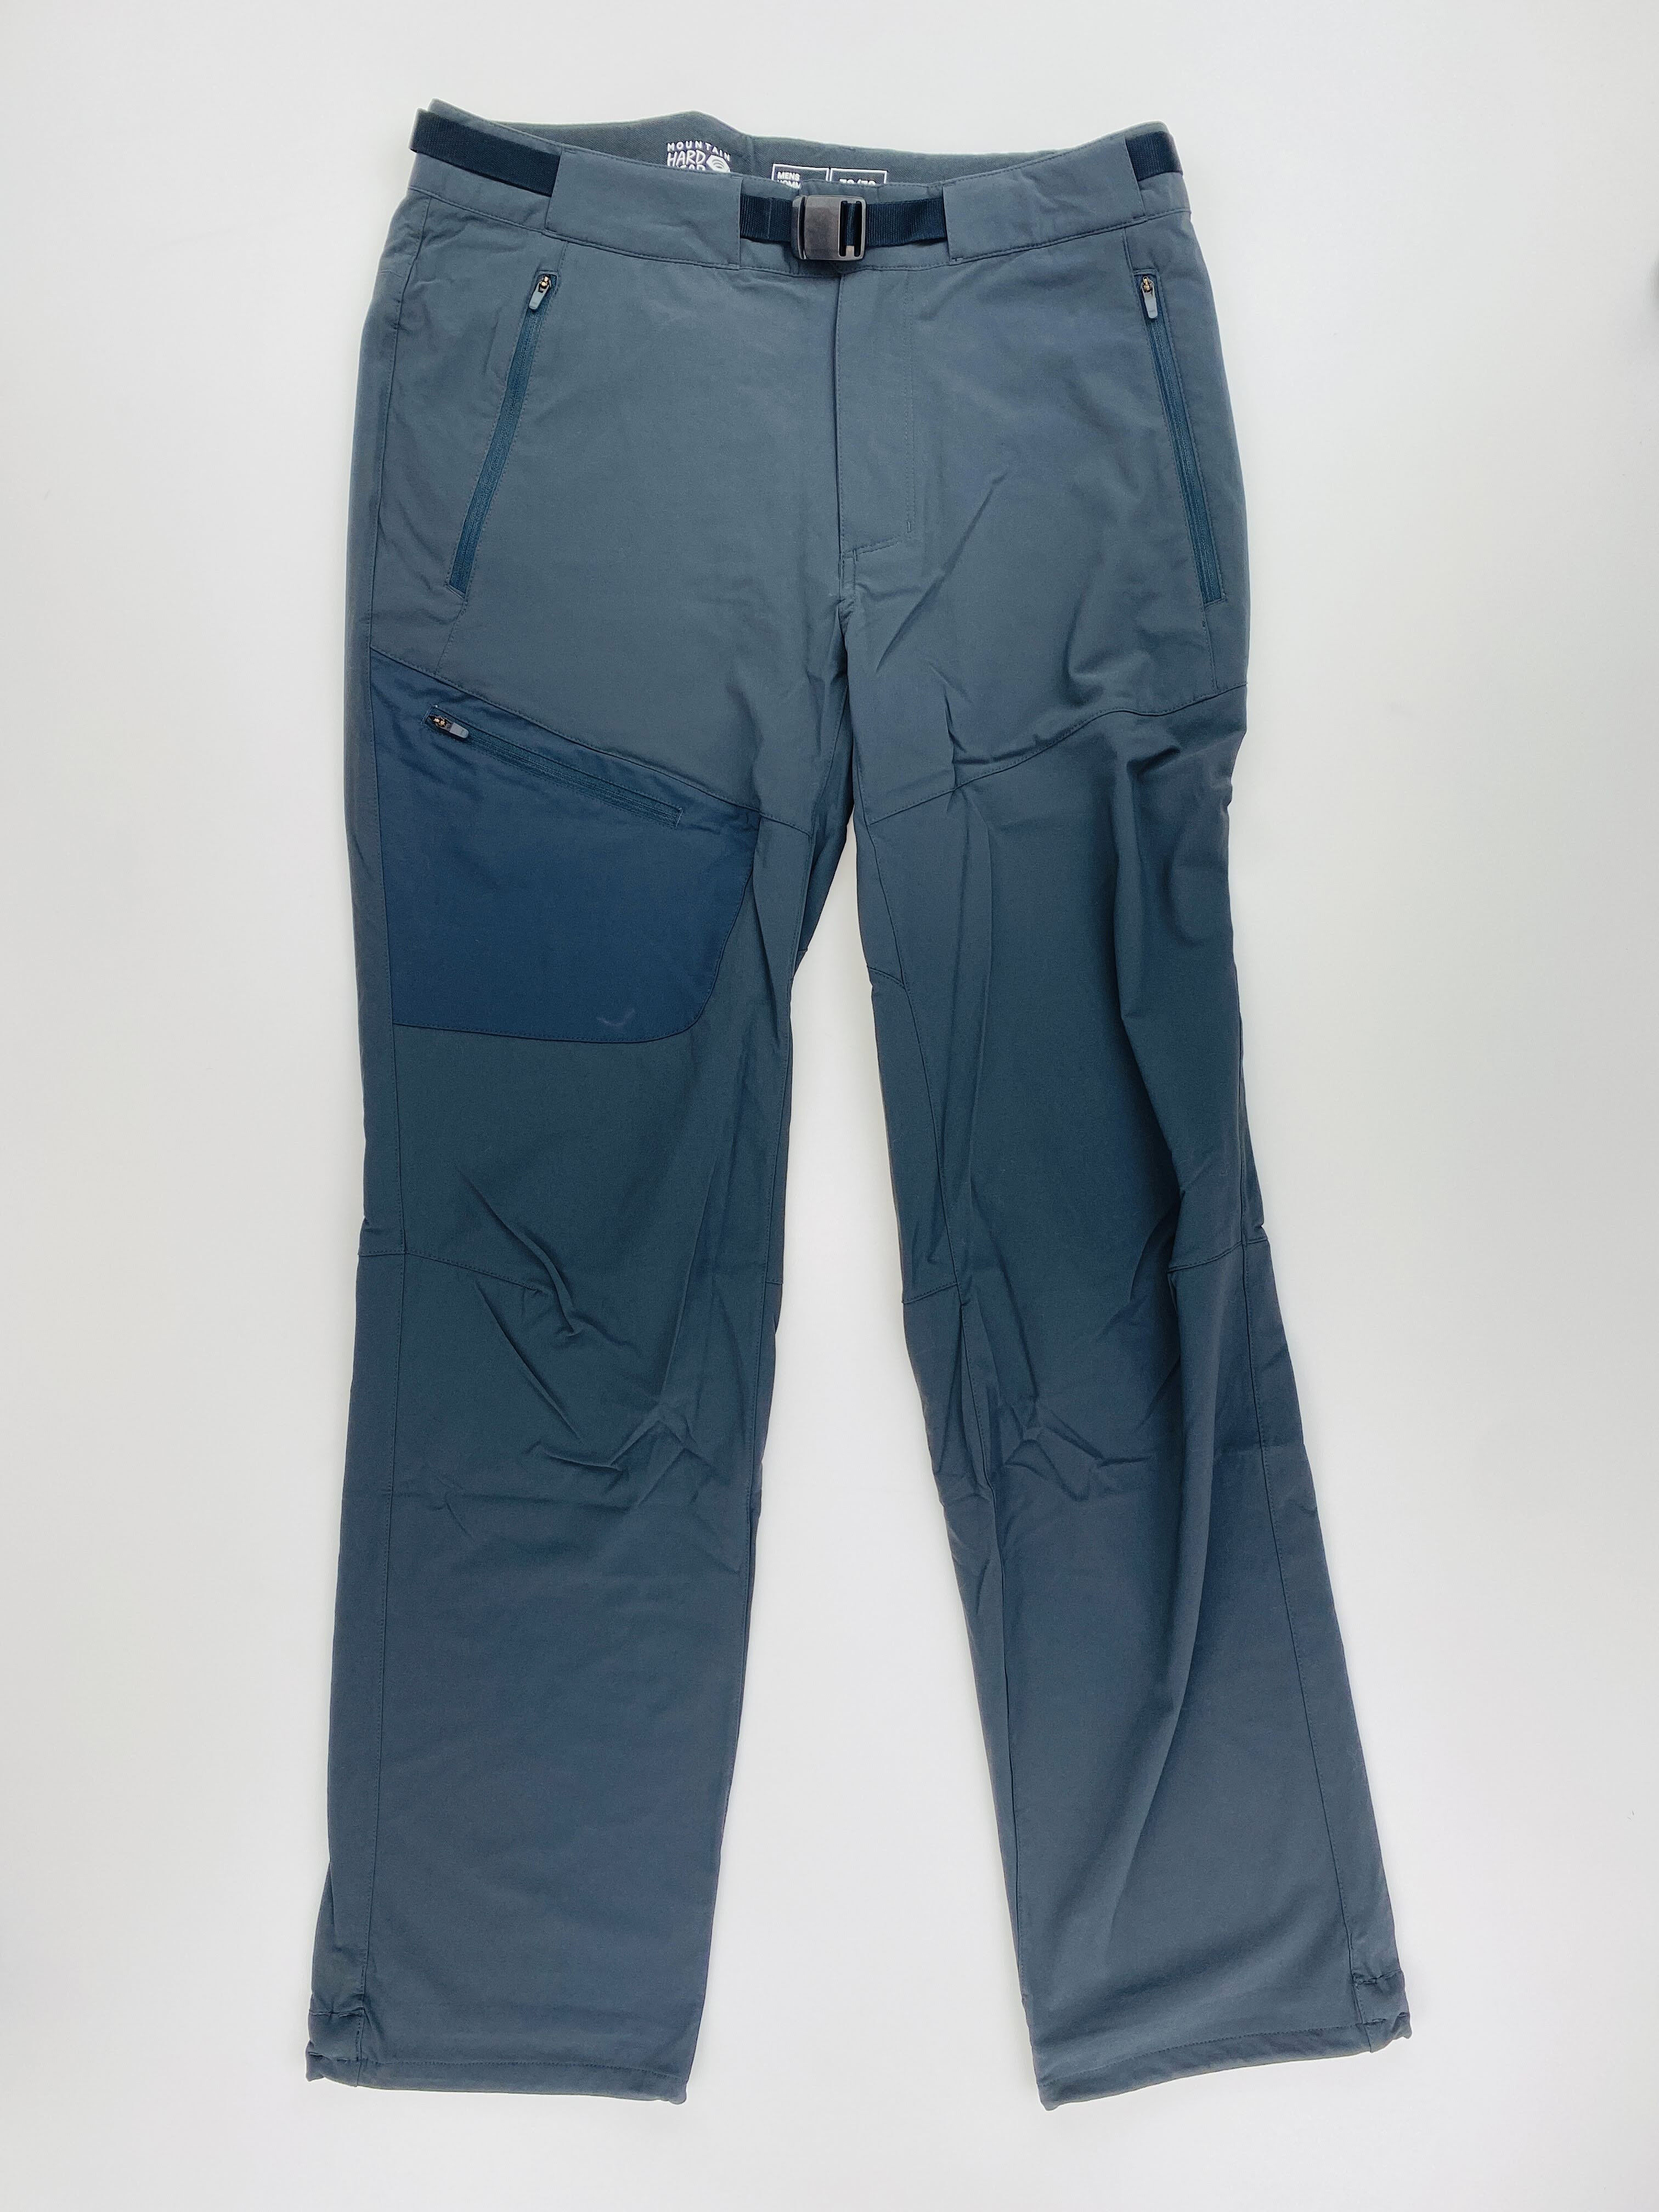 Mountain Hardwear Chockstone/2 Man Pant 32 - Seconde main Pantalon randonnée homme - Noir - US 32 | Hardloop